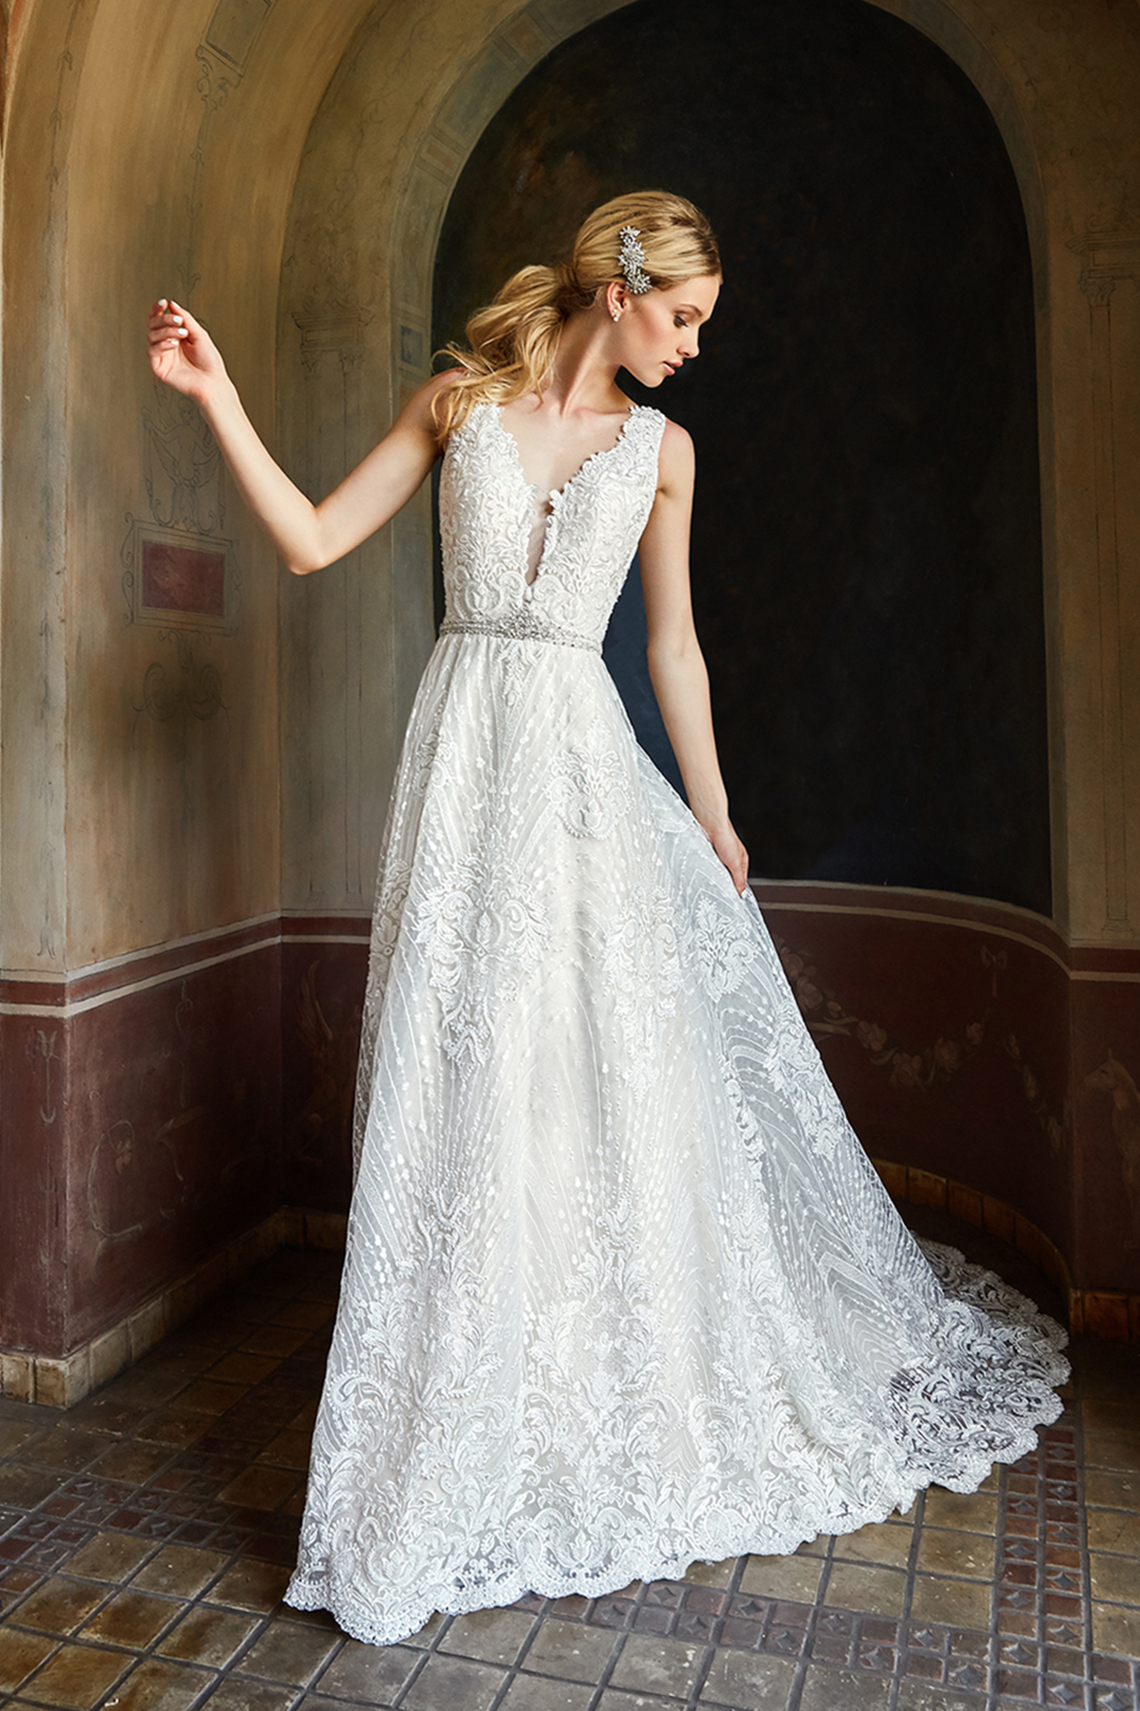 10 Stunning Wedding Dresses By Destination – Val Stefani Cyprus Dress 3